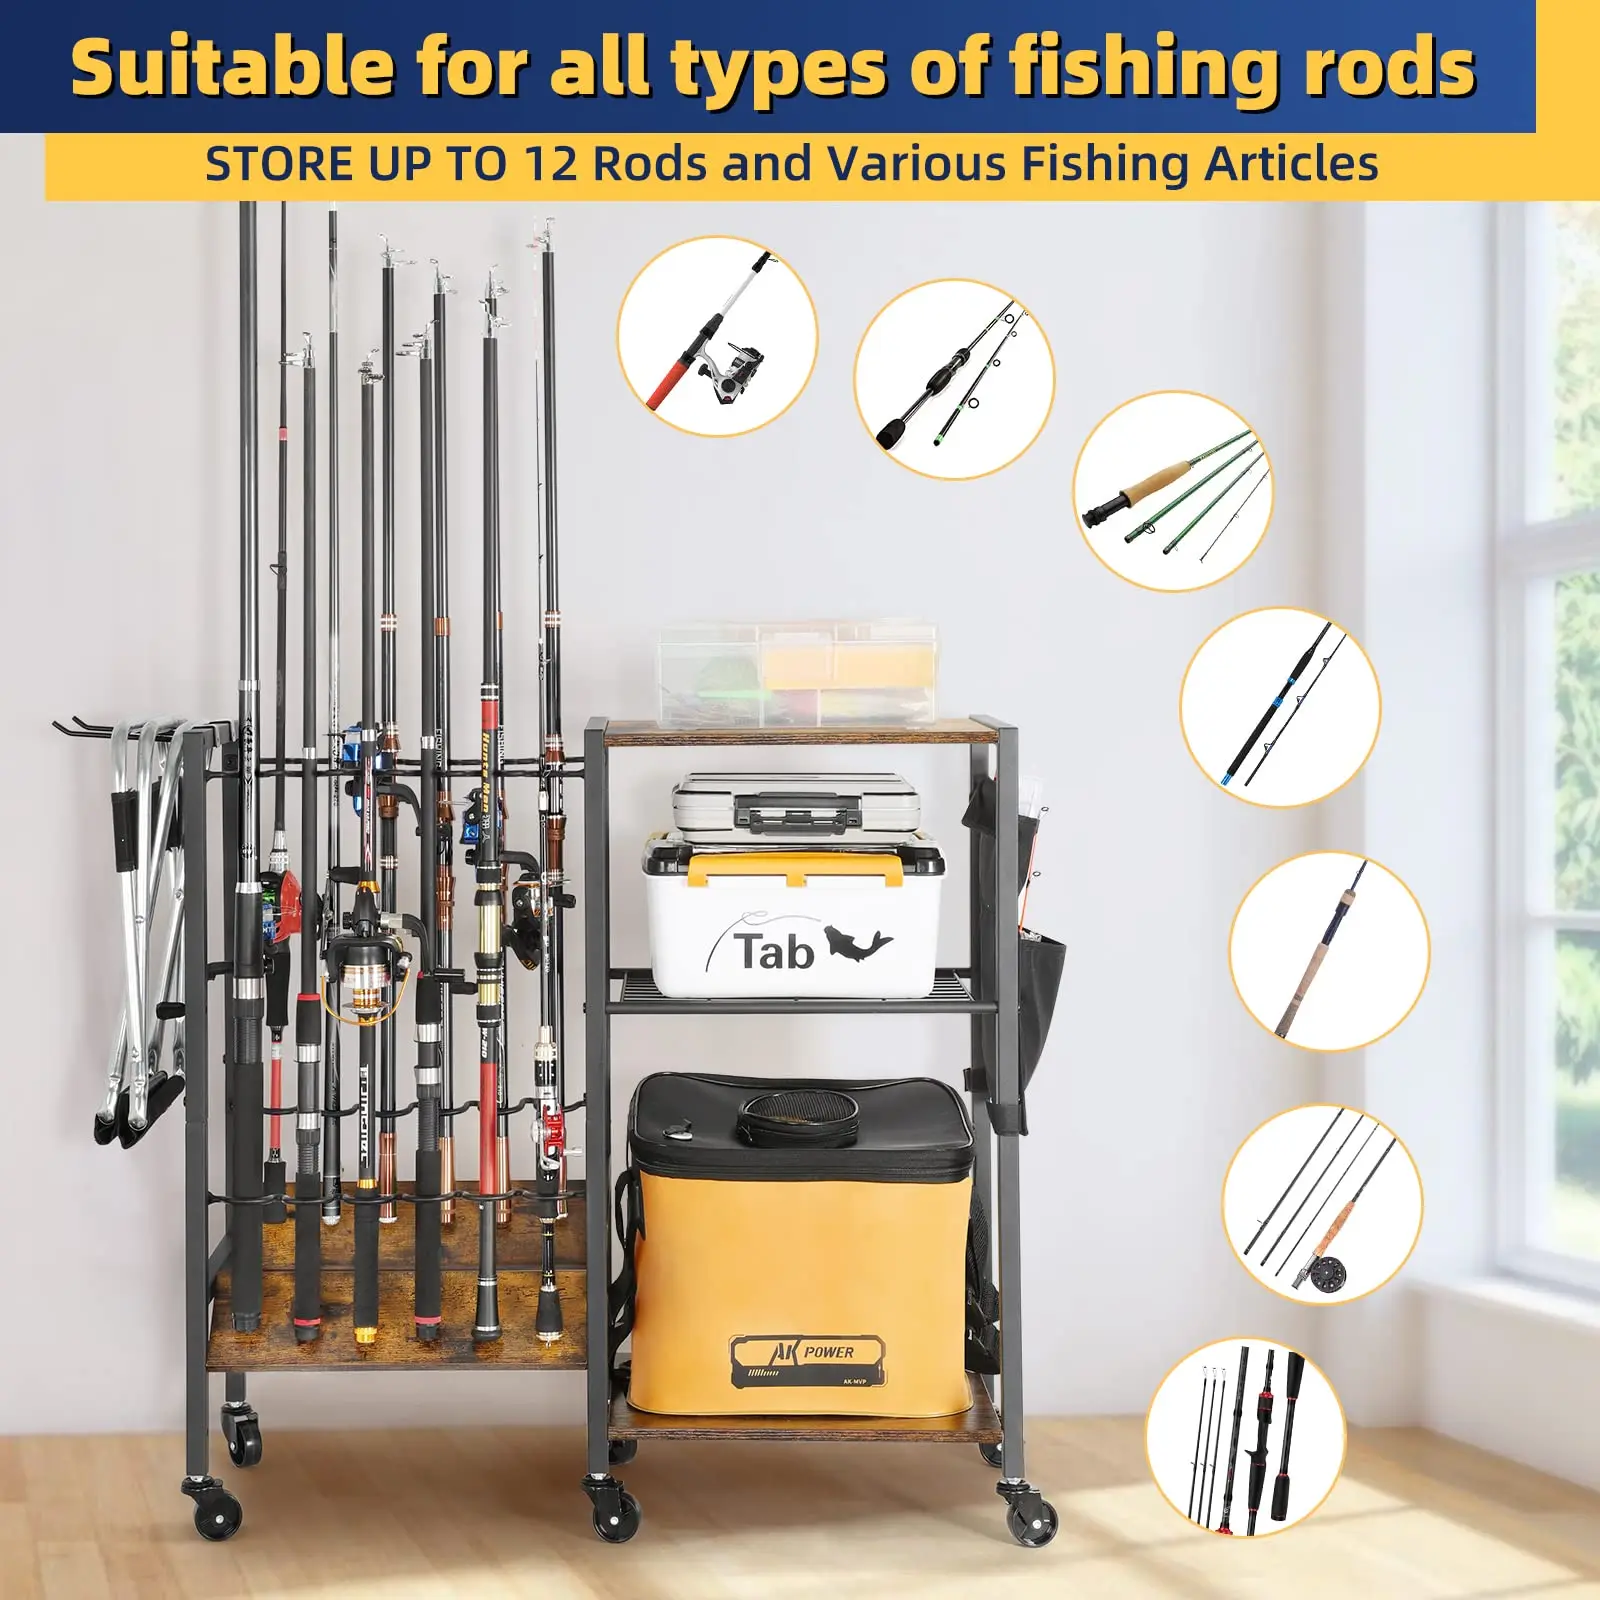 Garage Home Entryway Corner 12 Rods Fishing Rod Tackle Cart Fishing Gear Fishing Equipment Organizers Holders